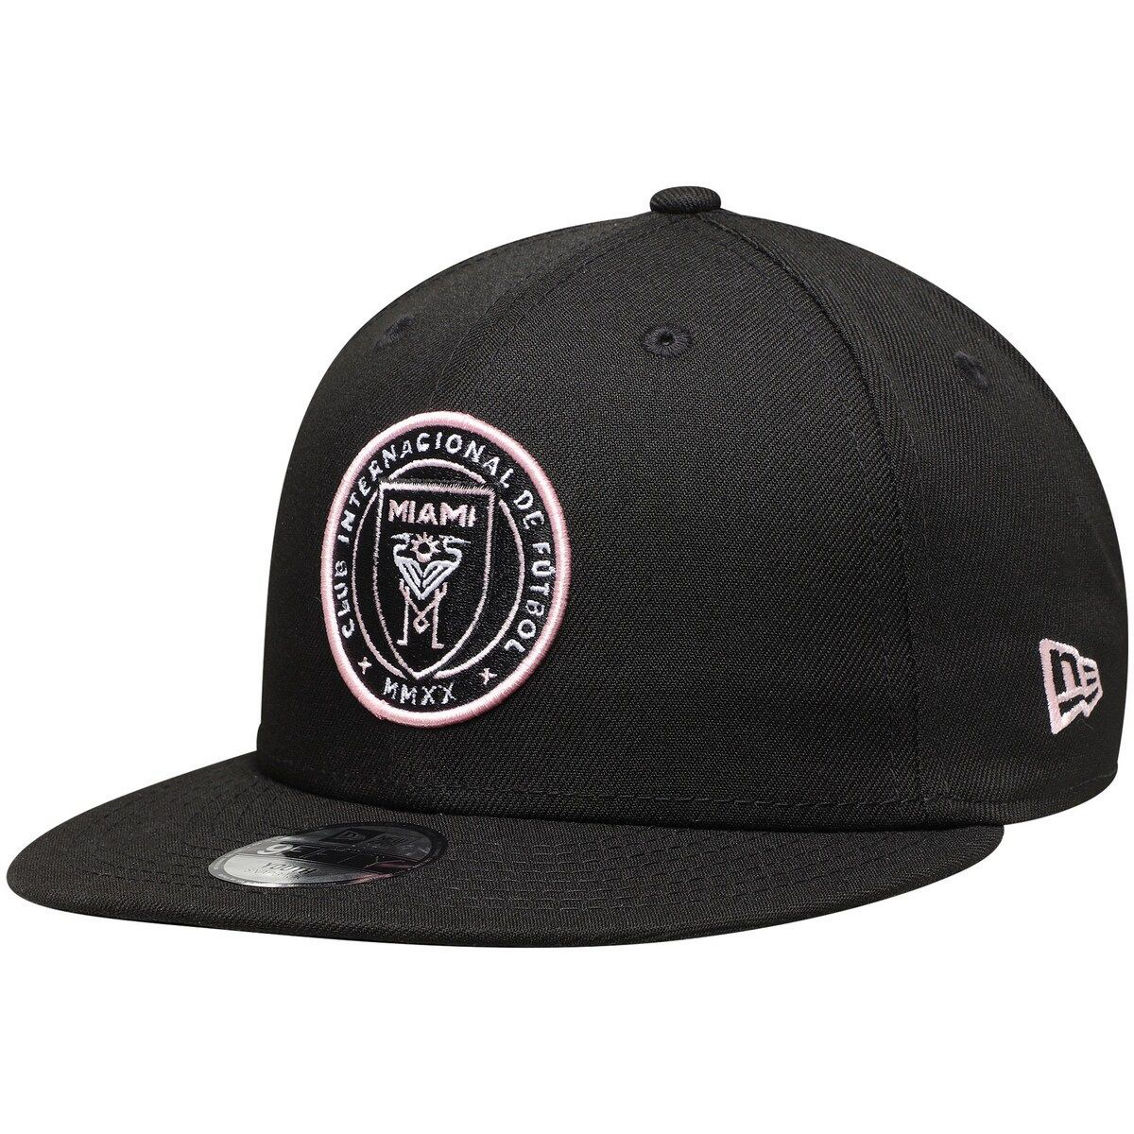 New Era Youth Black Inter Miami CF 9FIFTY Team Logo Snapback Hat - Image 2 of 4